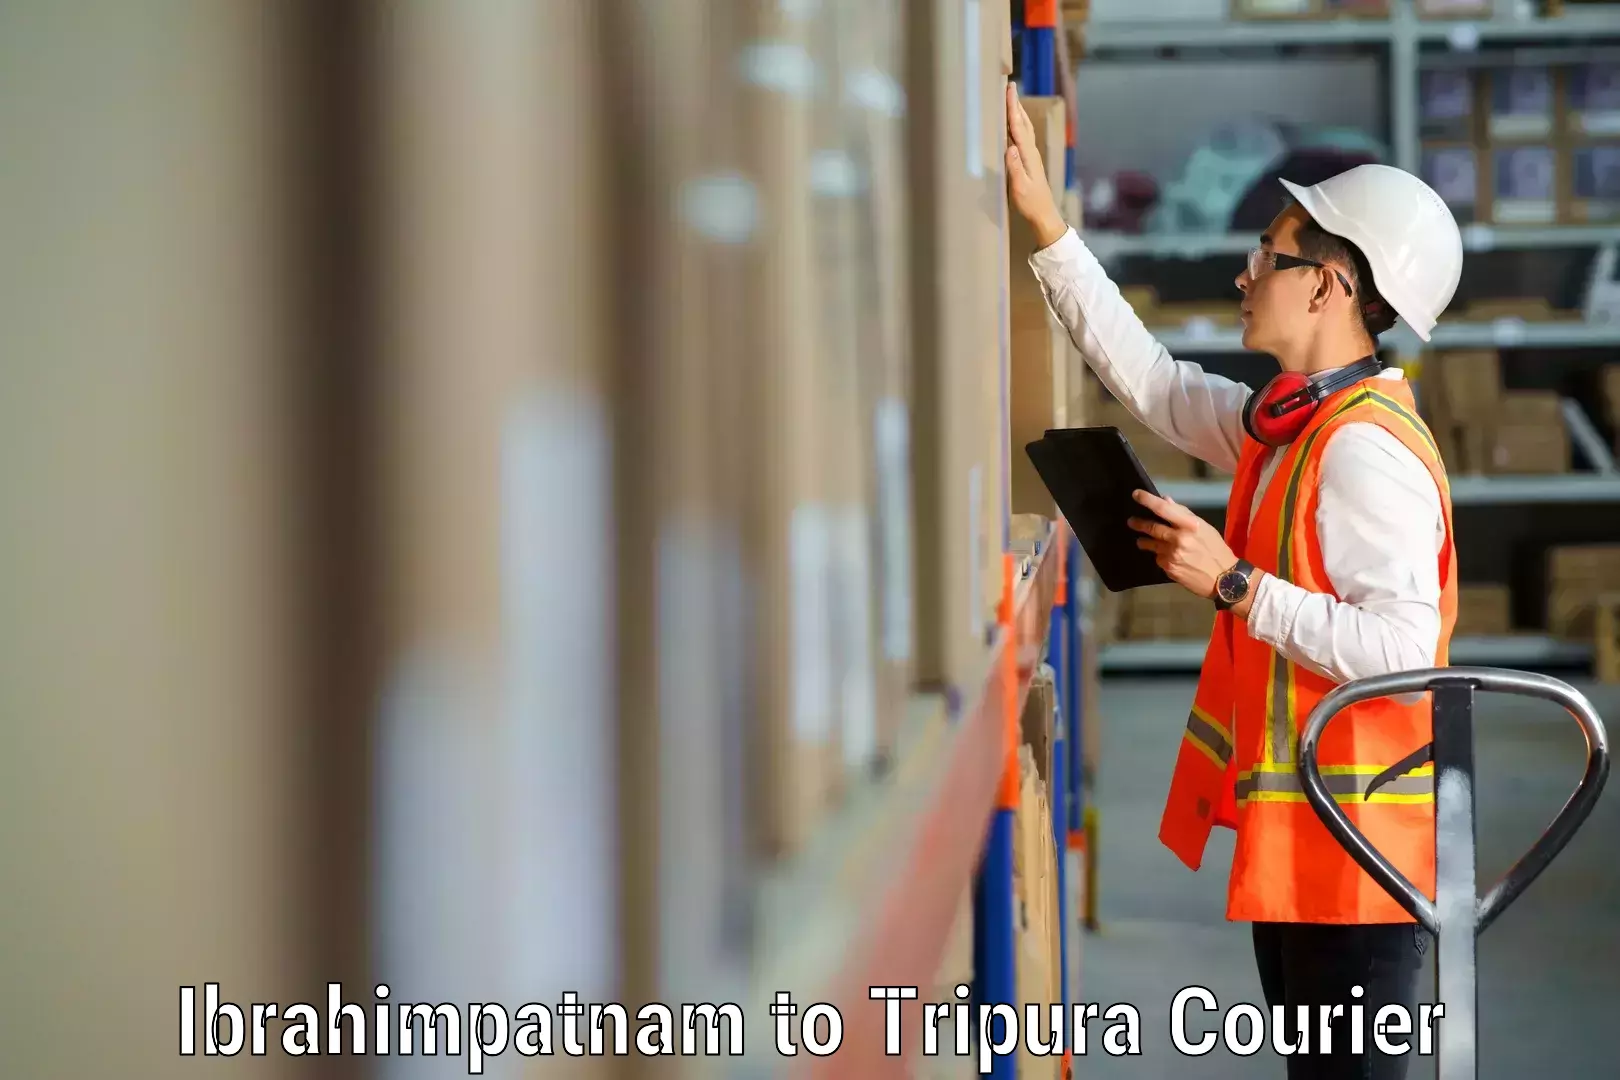 Professional relocation services in Ibrahimpatnam to Udaipur Tripura